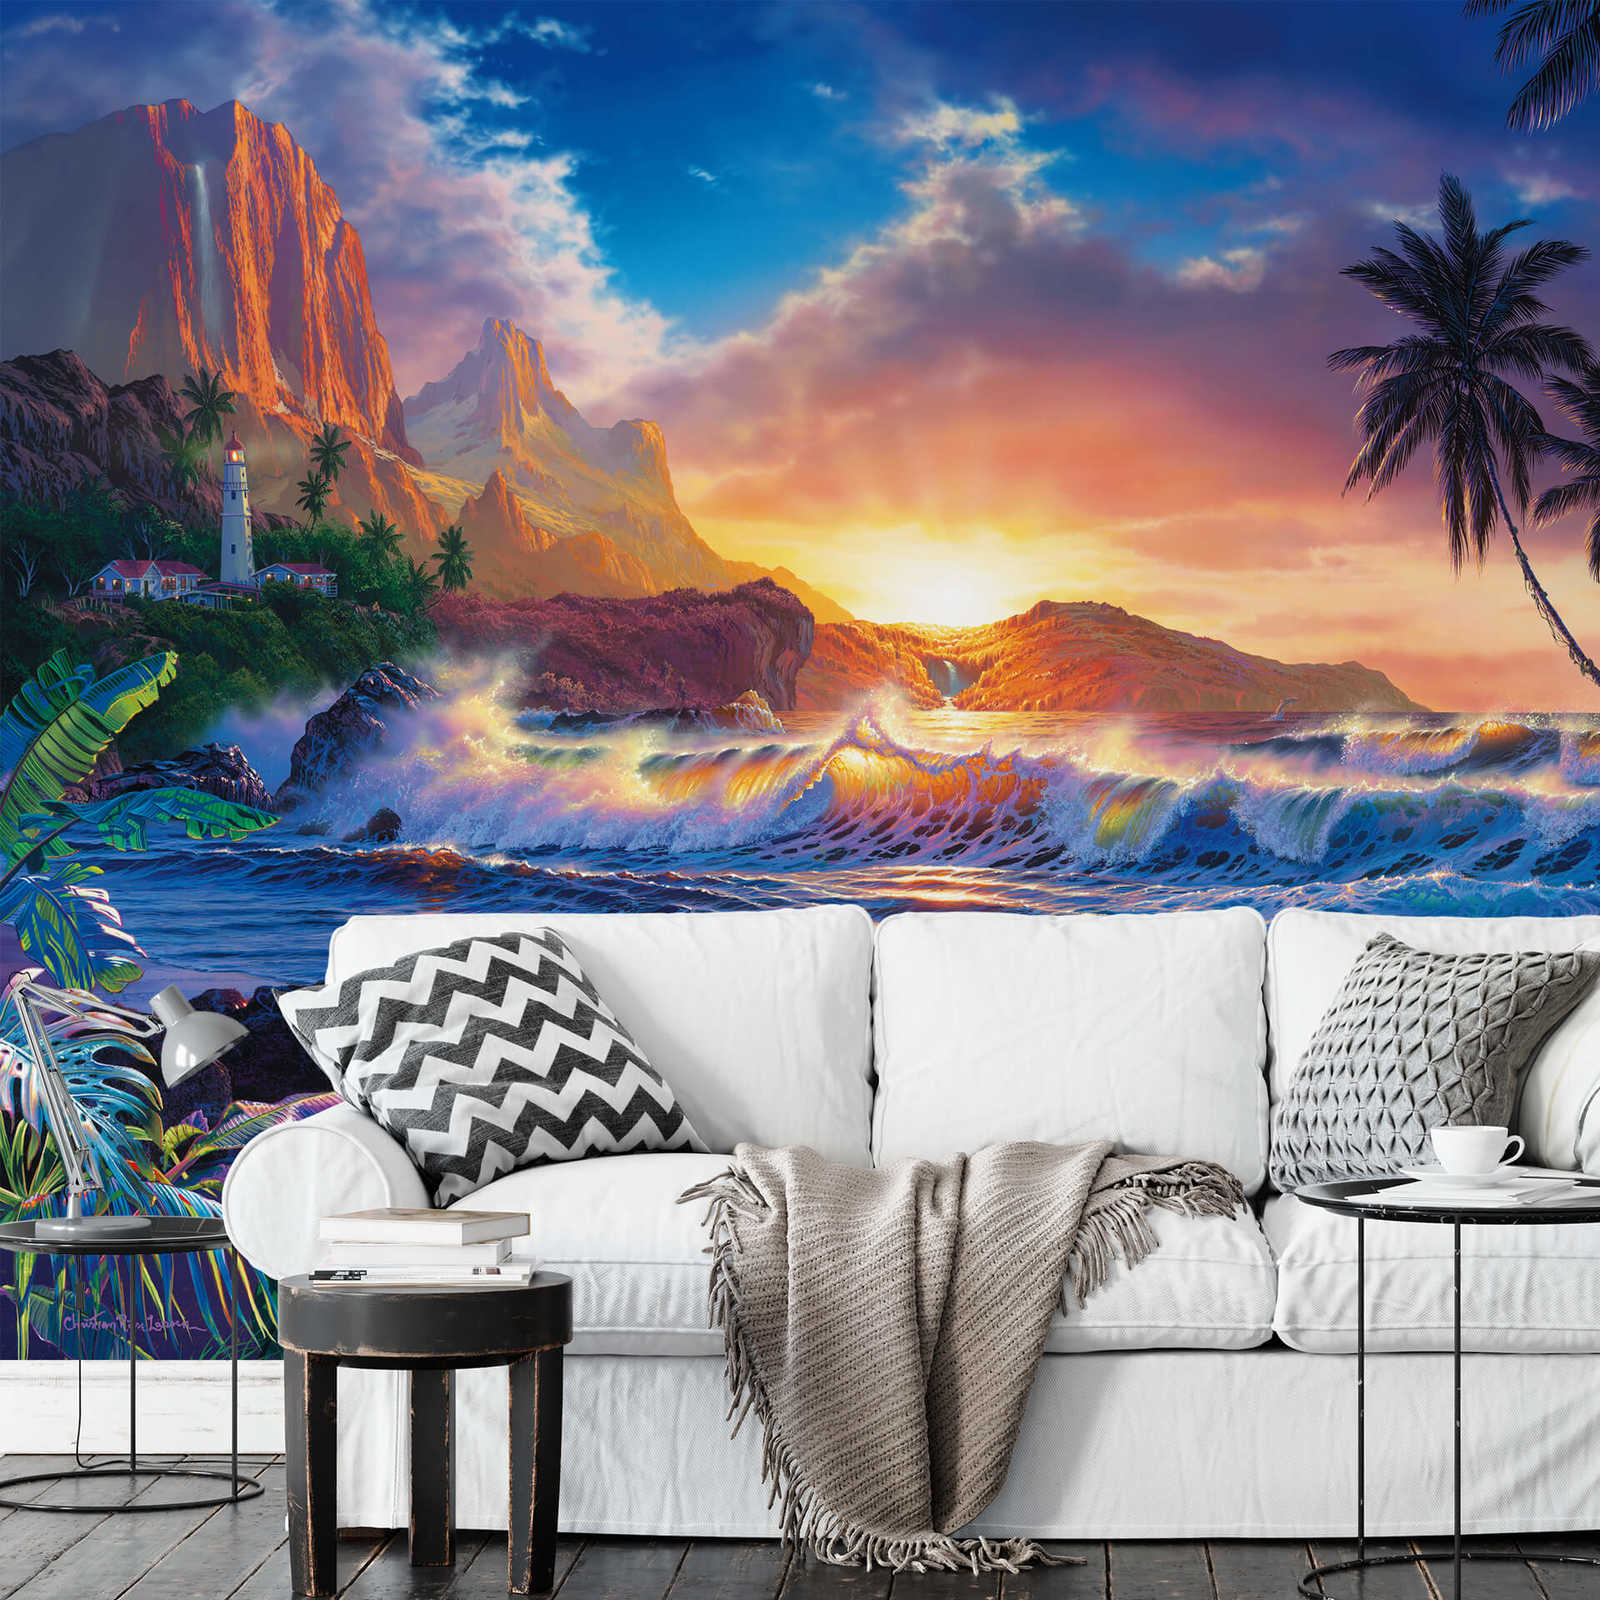             Papel pintado Paradise con paisaje costero tropical
        